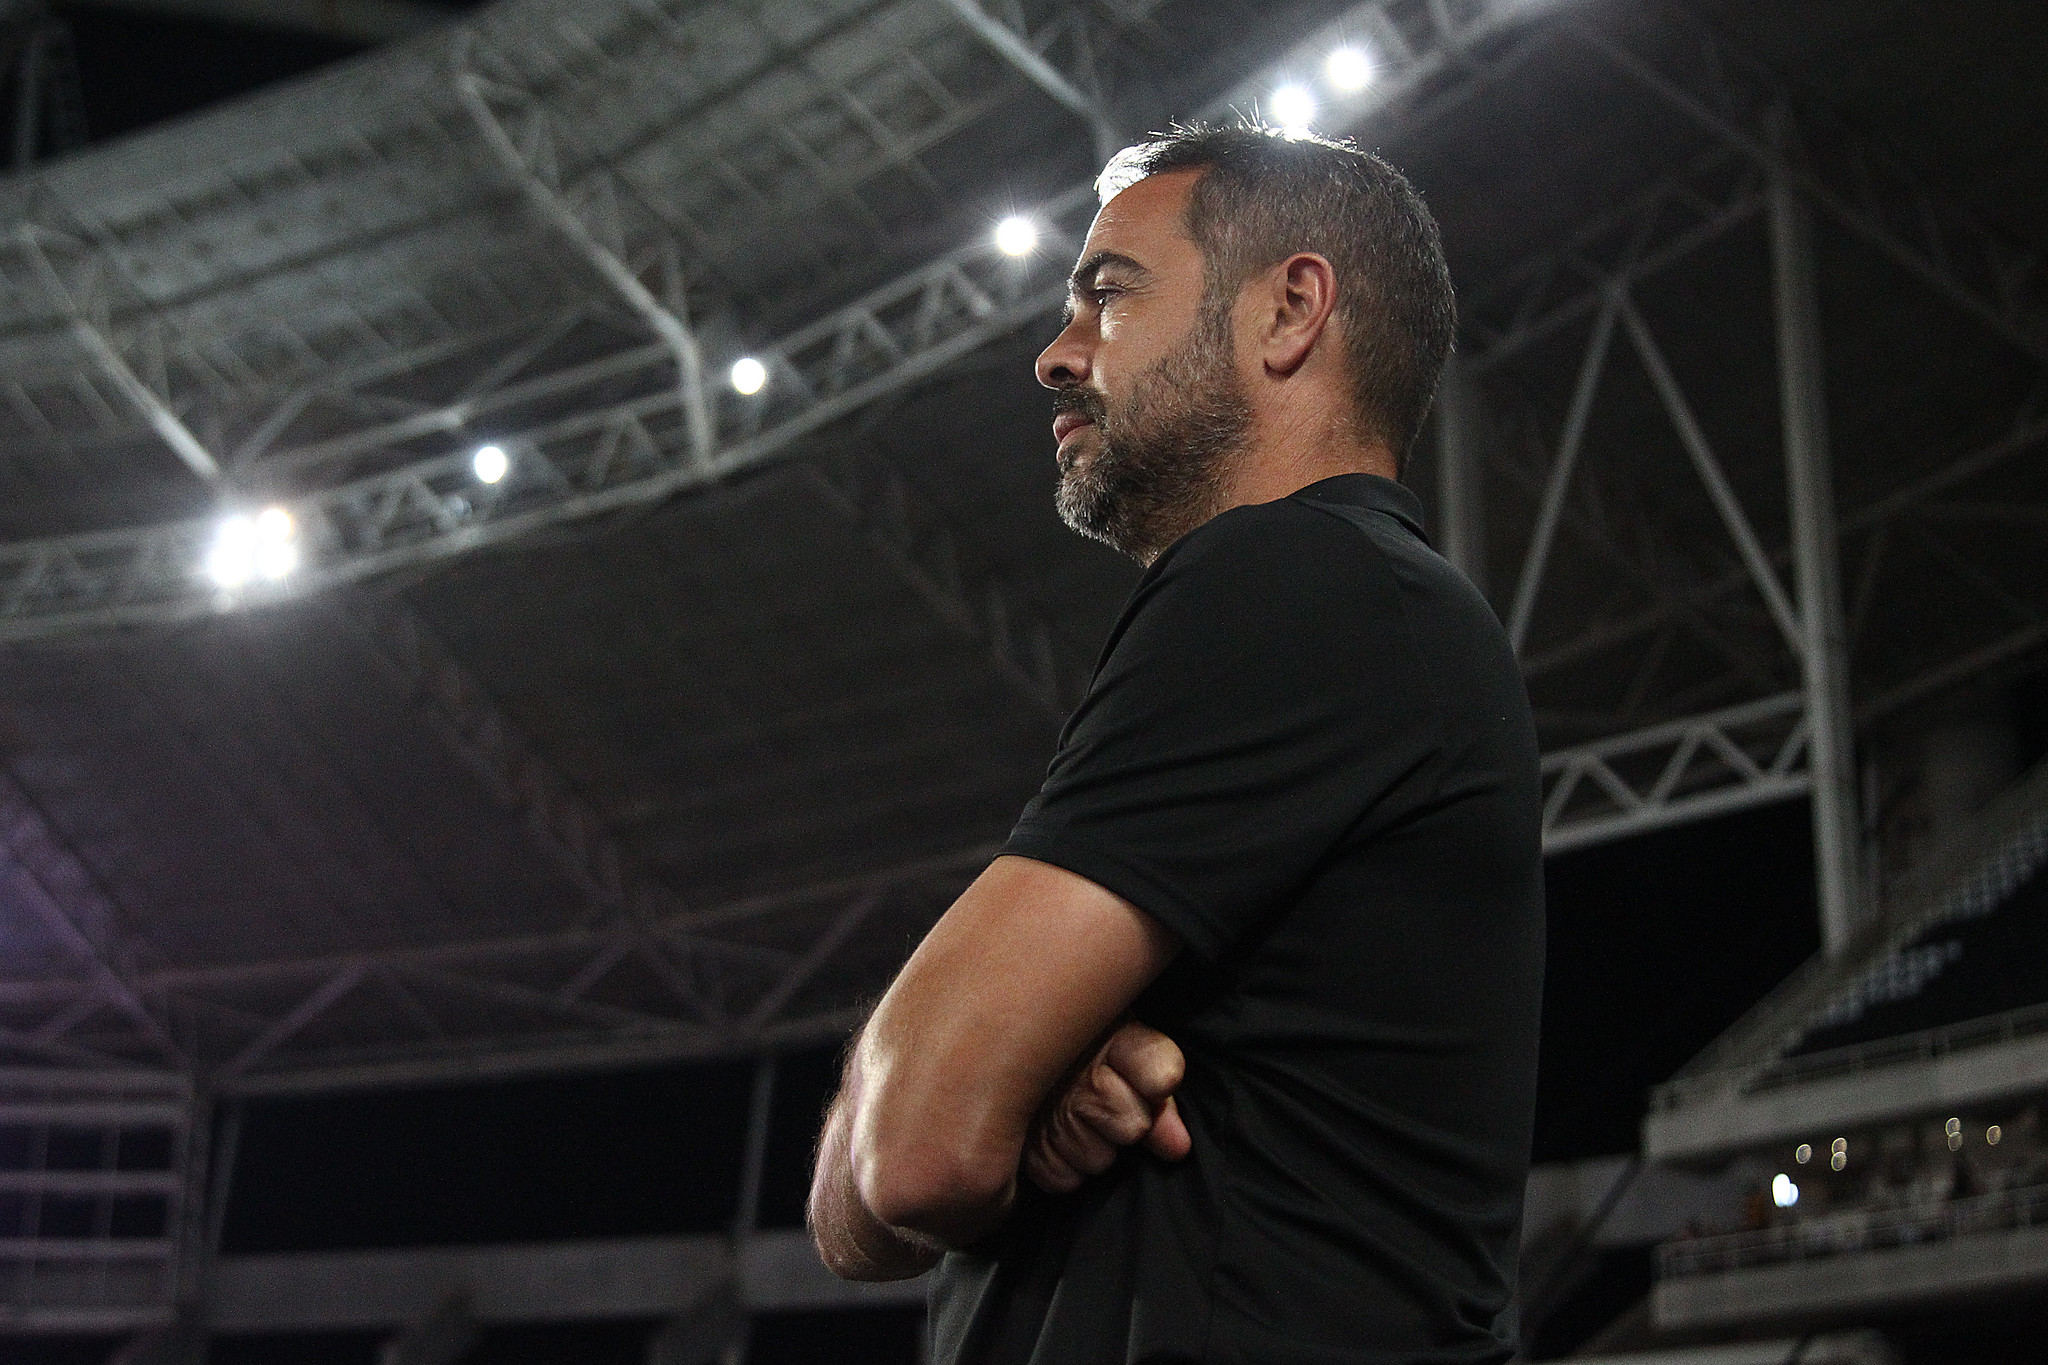 Artur Jorge. (Foto: Vitor Silva/Botafogo)